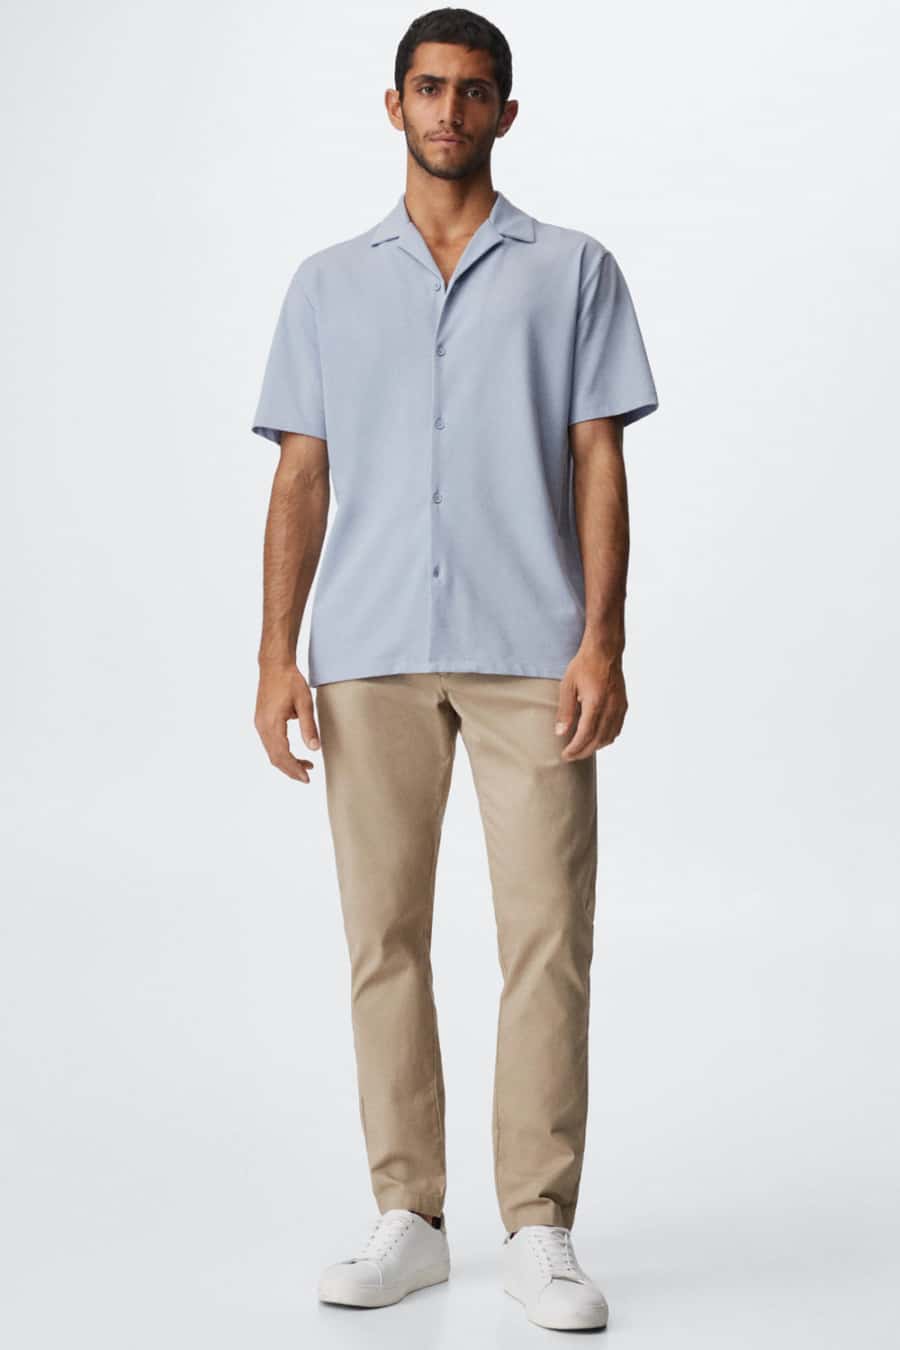 Men's khaki chino pants, grey Cuban collar shirt and white sneakers outfit